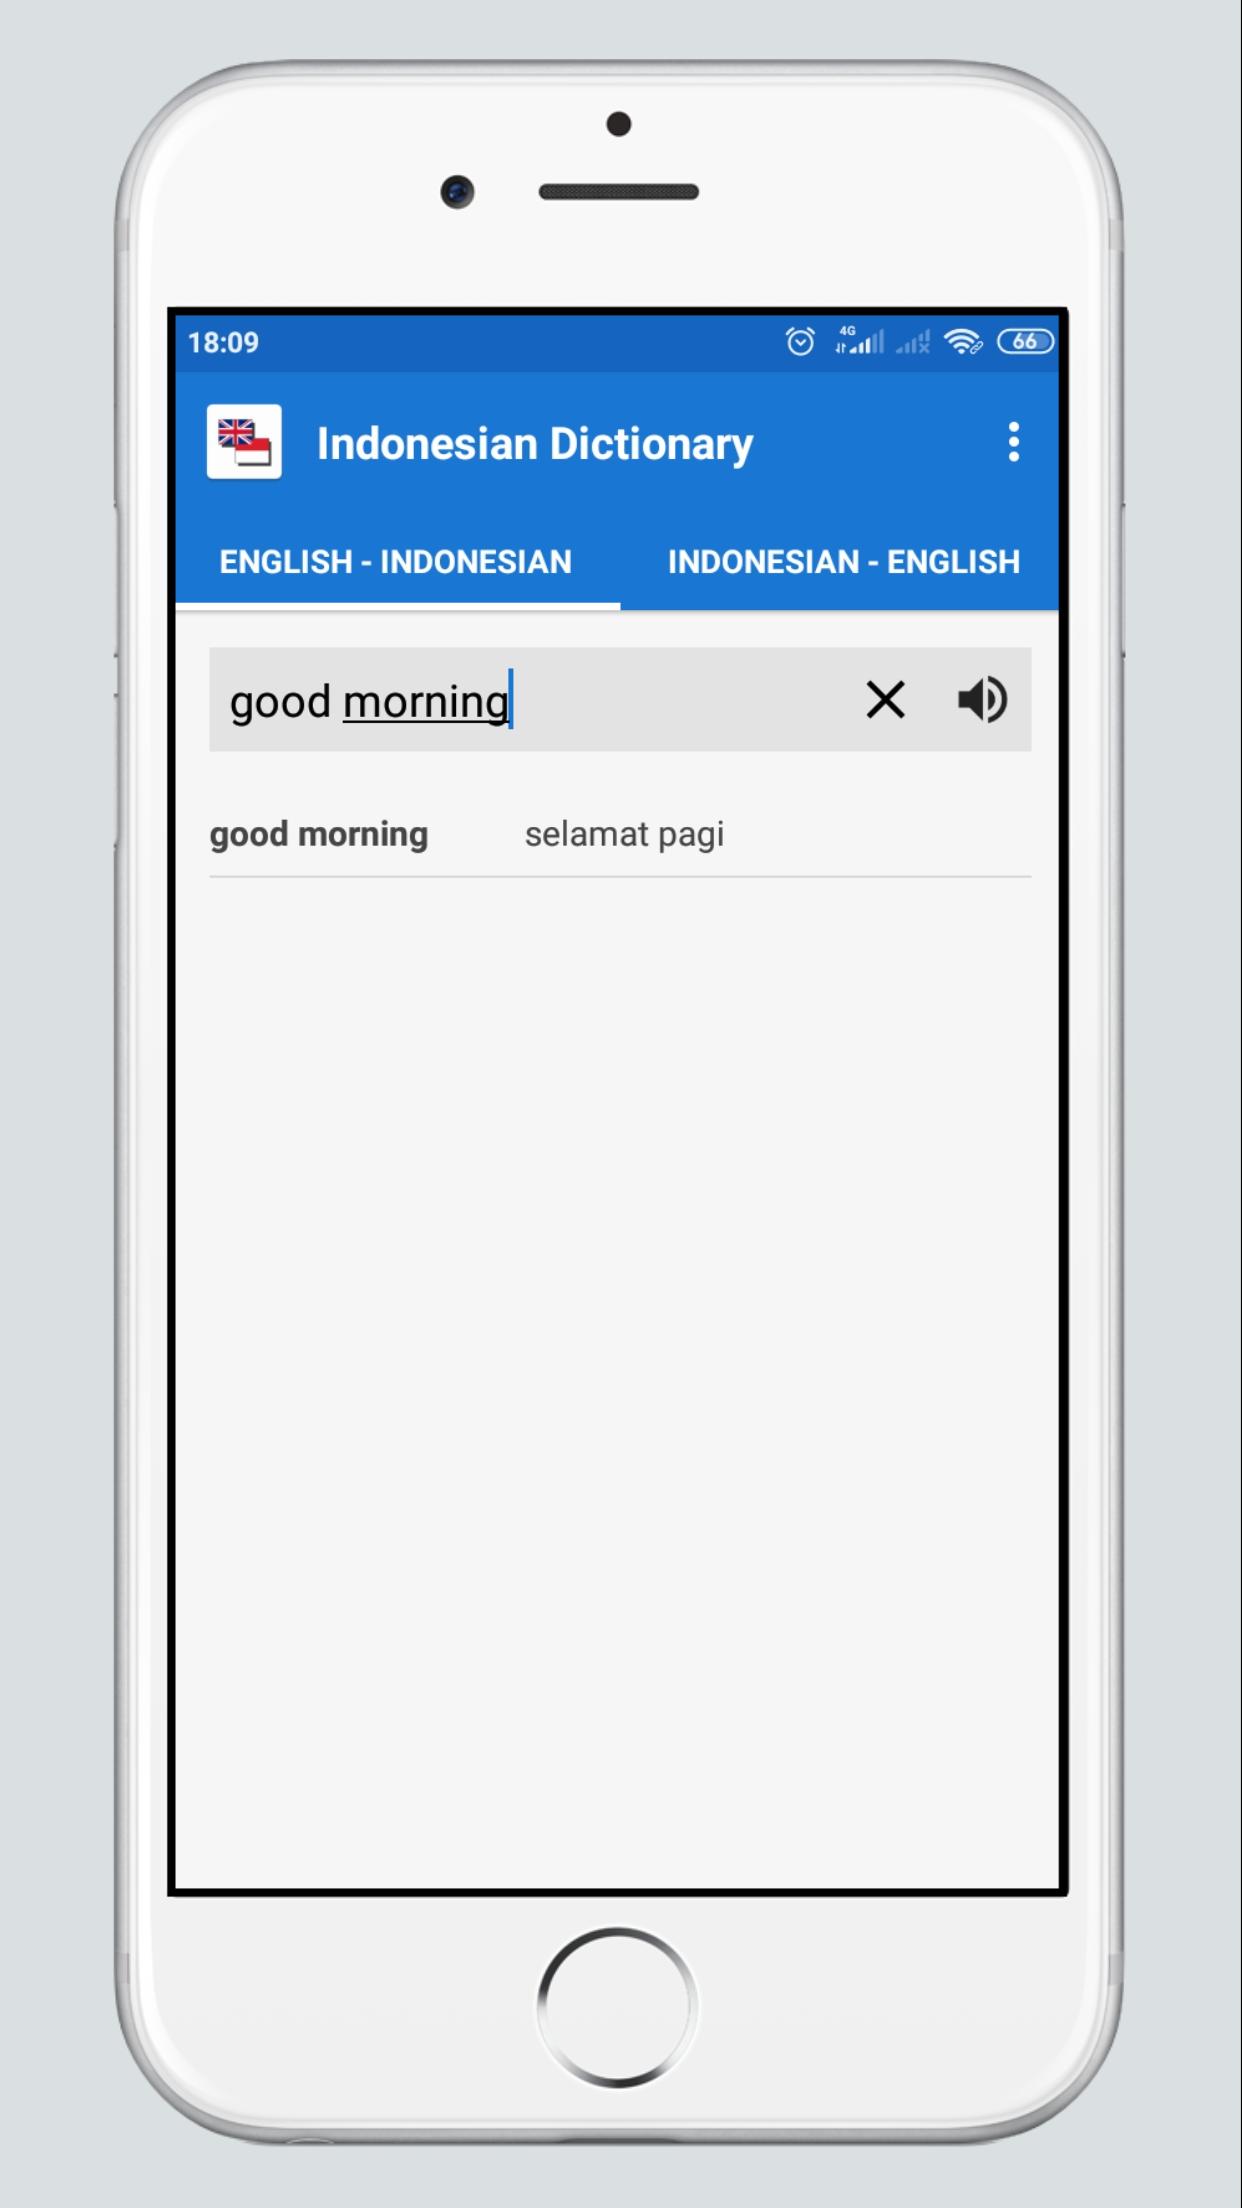 English - Indonesian Dictionary 1.0.2 Screenshot 3